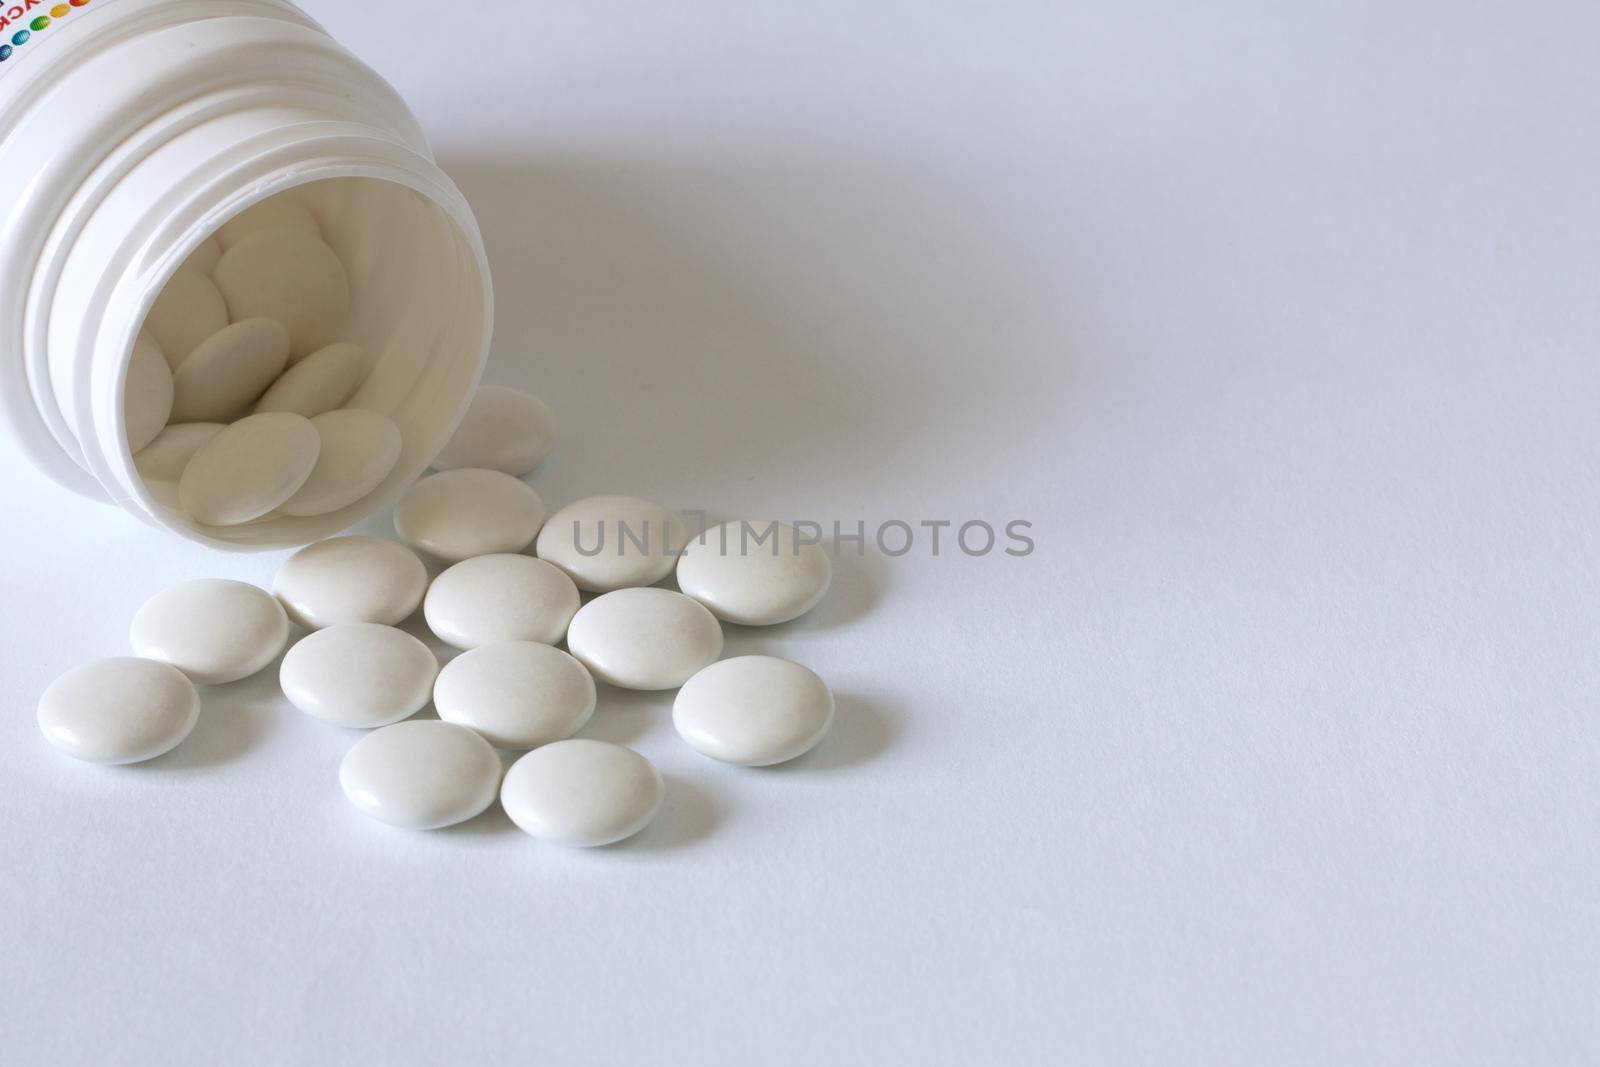 Pills from a jar on a light background by marketlan